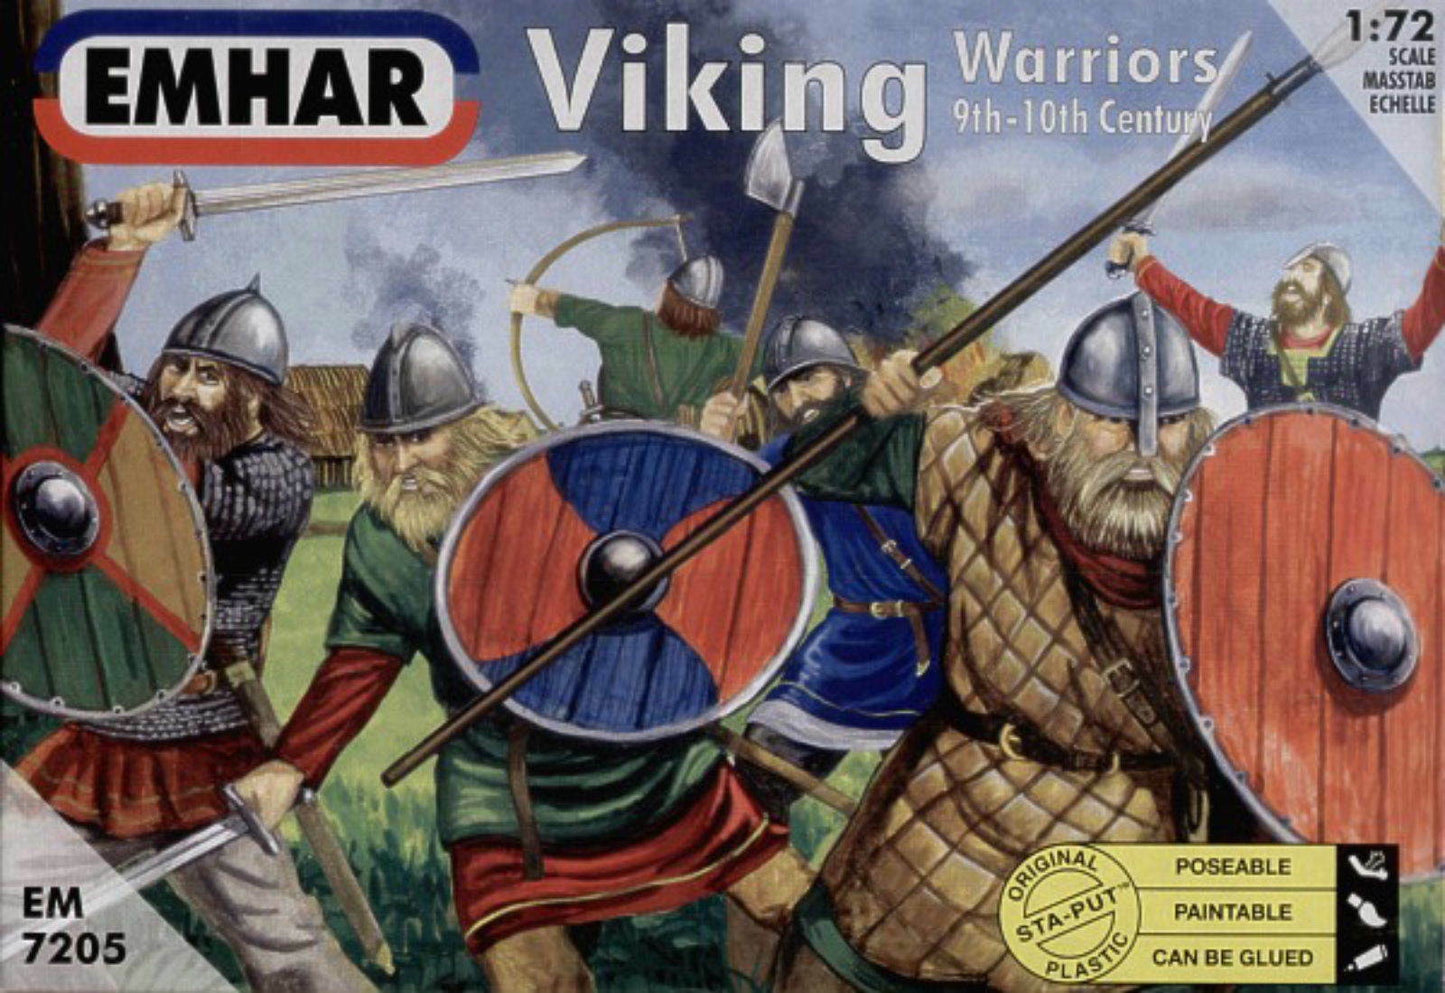 EM7205 Viking Warriors 9th-10th Century